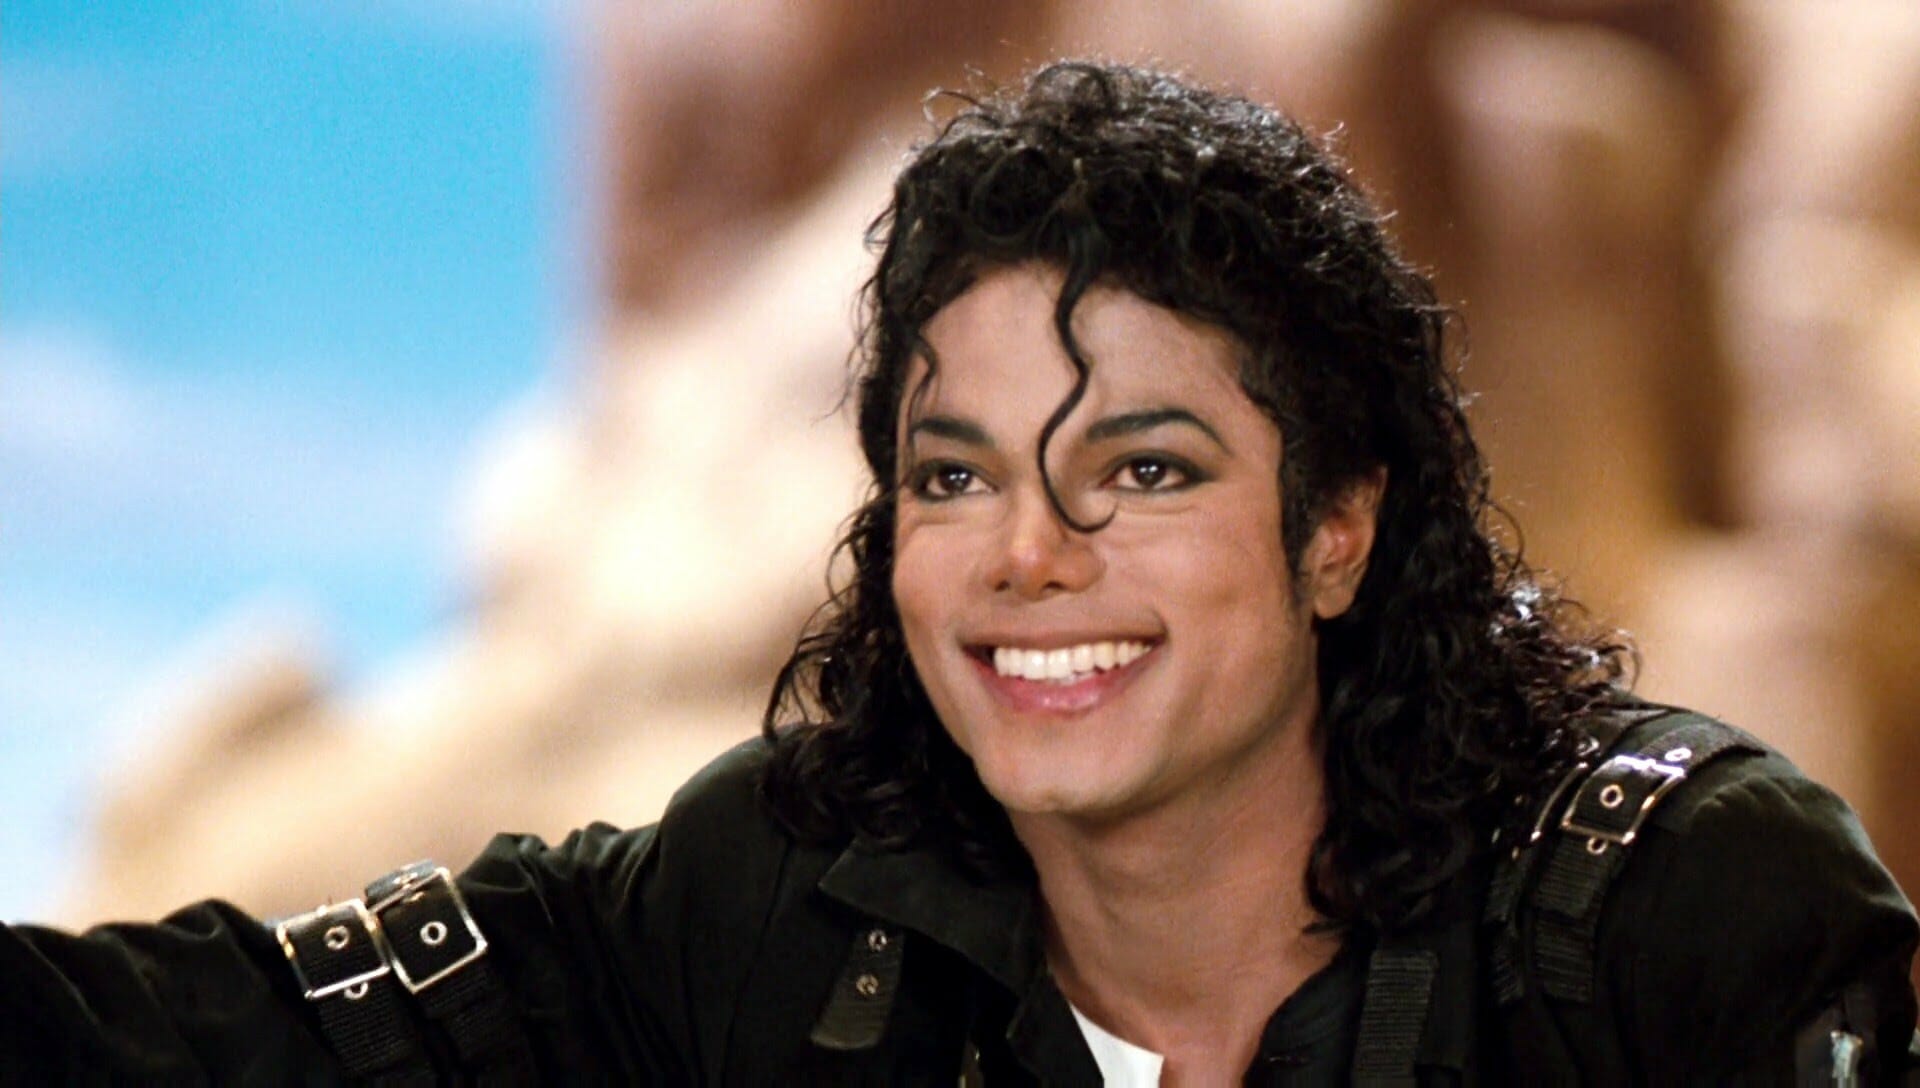 La BBC realizará documental de Michael Jackson para competirle a HBO. Cusica Plus.